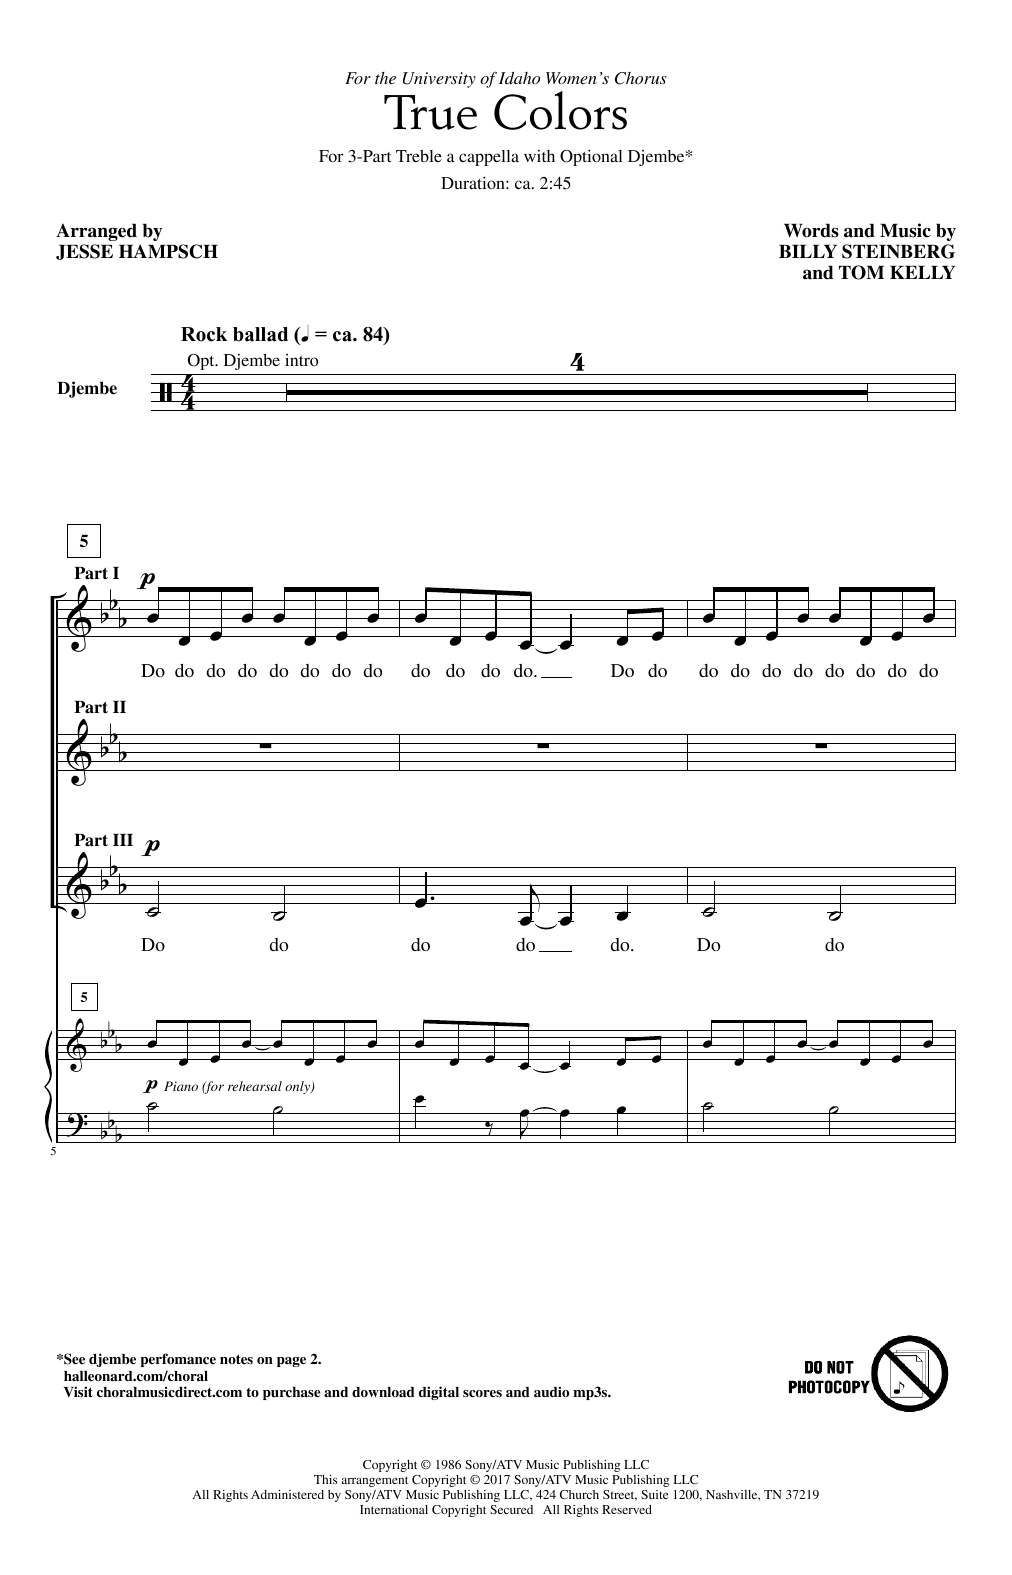 Cyndi Lauper True Colors (arr. Jesse Hampsch) sheet music notes and chords arranged for 3-Part Treble Choir